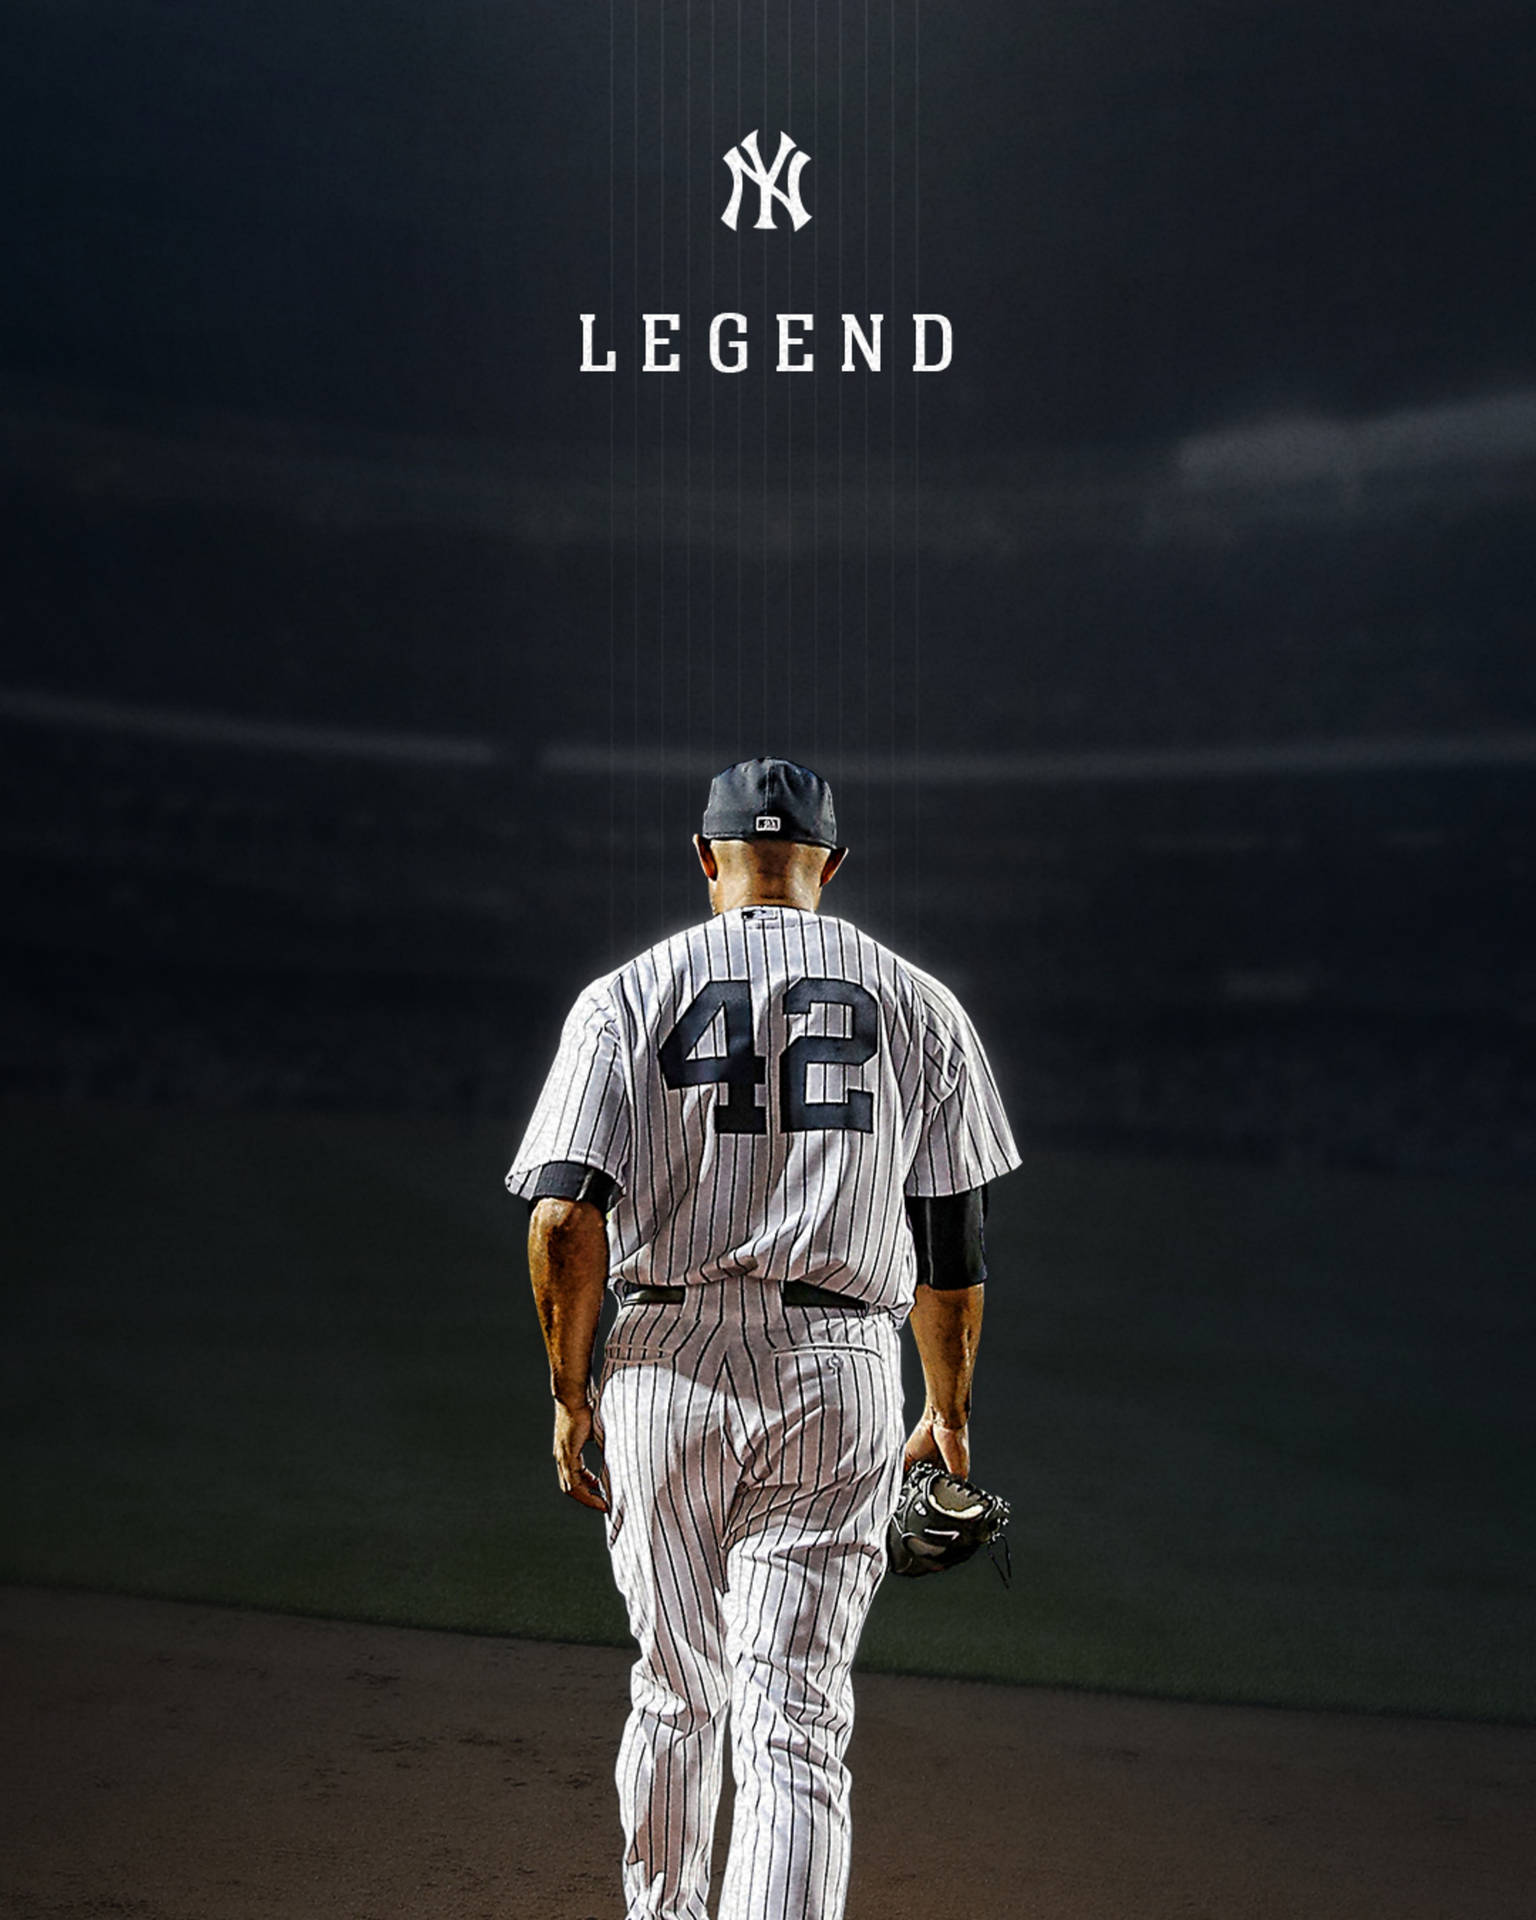 Yankees Mariano Rivera Legend Wallpaper